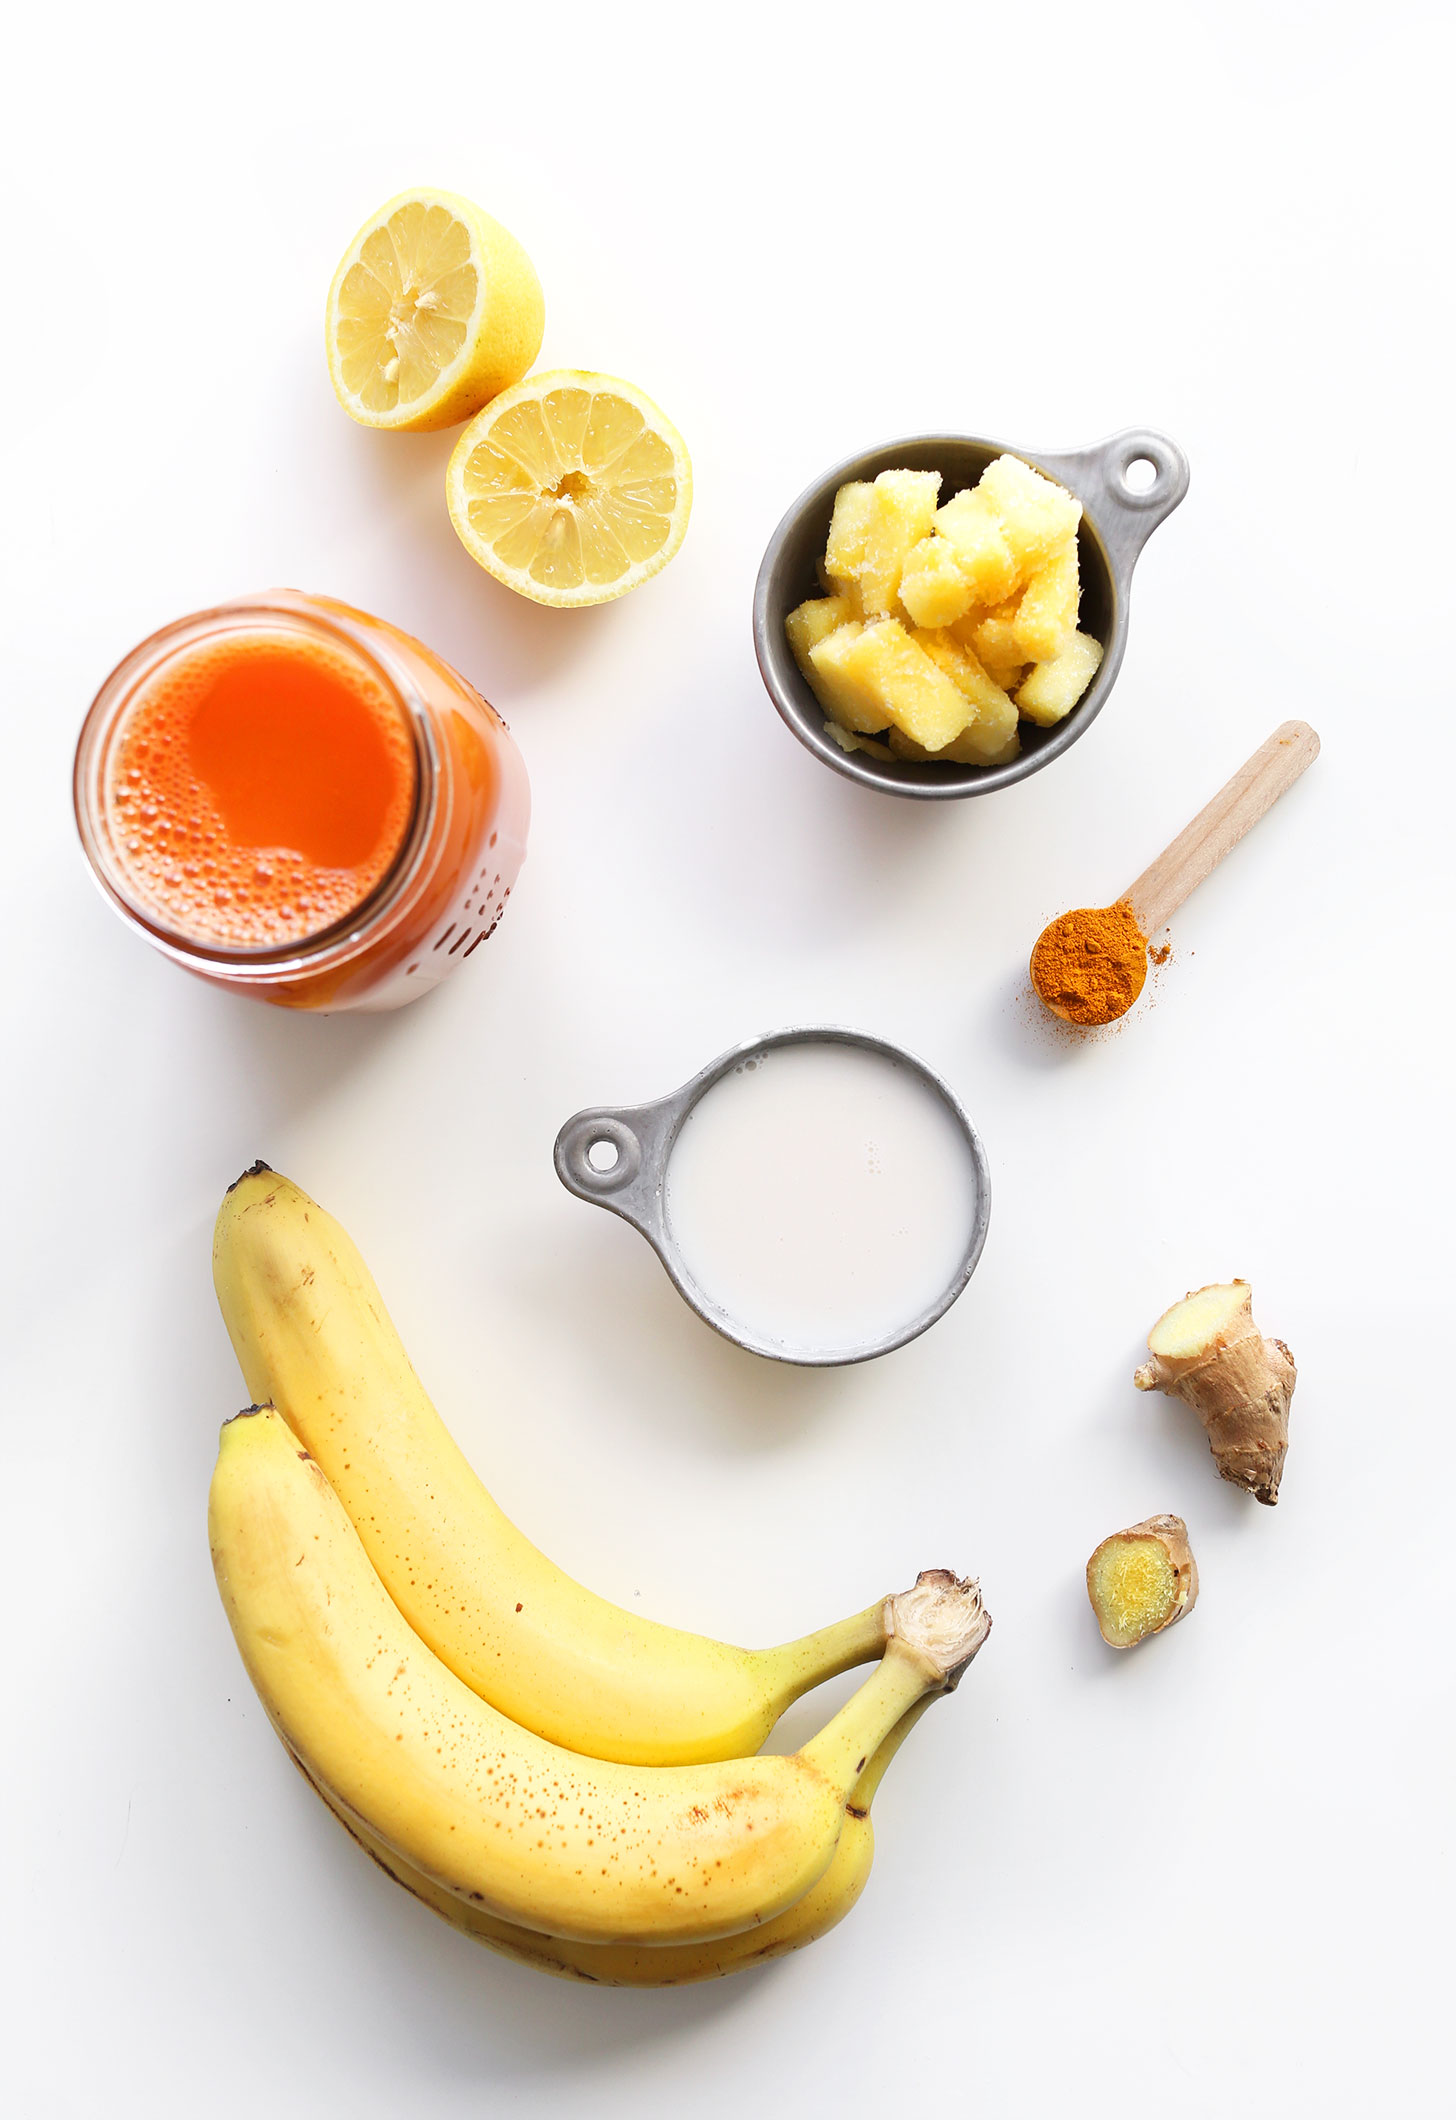 Bananas, ginger, turmeric, pineapple, lemon, carrot juice, and coconut milk for making a refreshing vegan smoothie